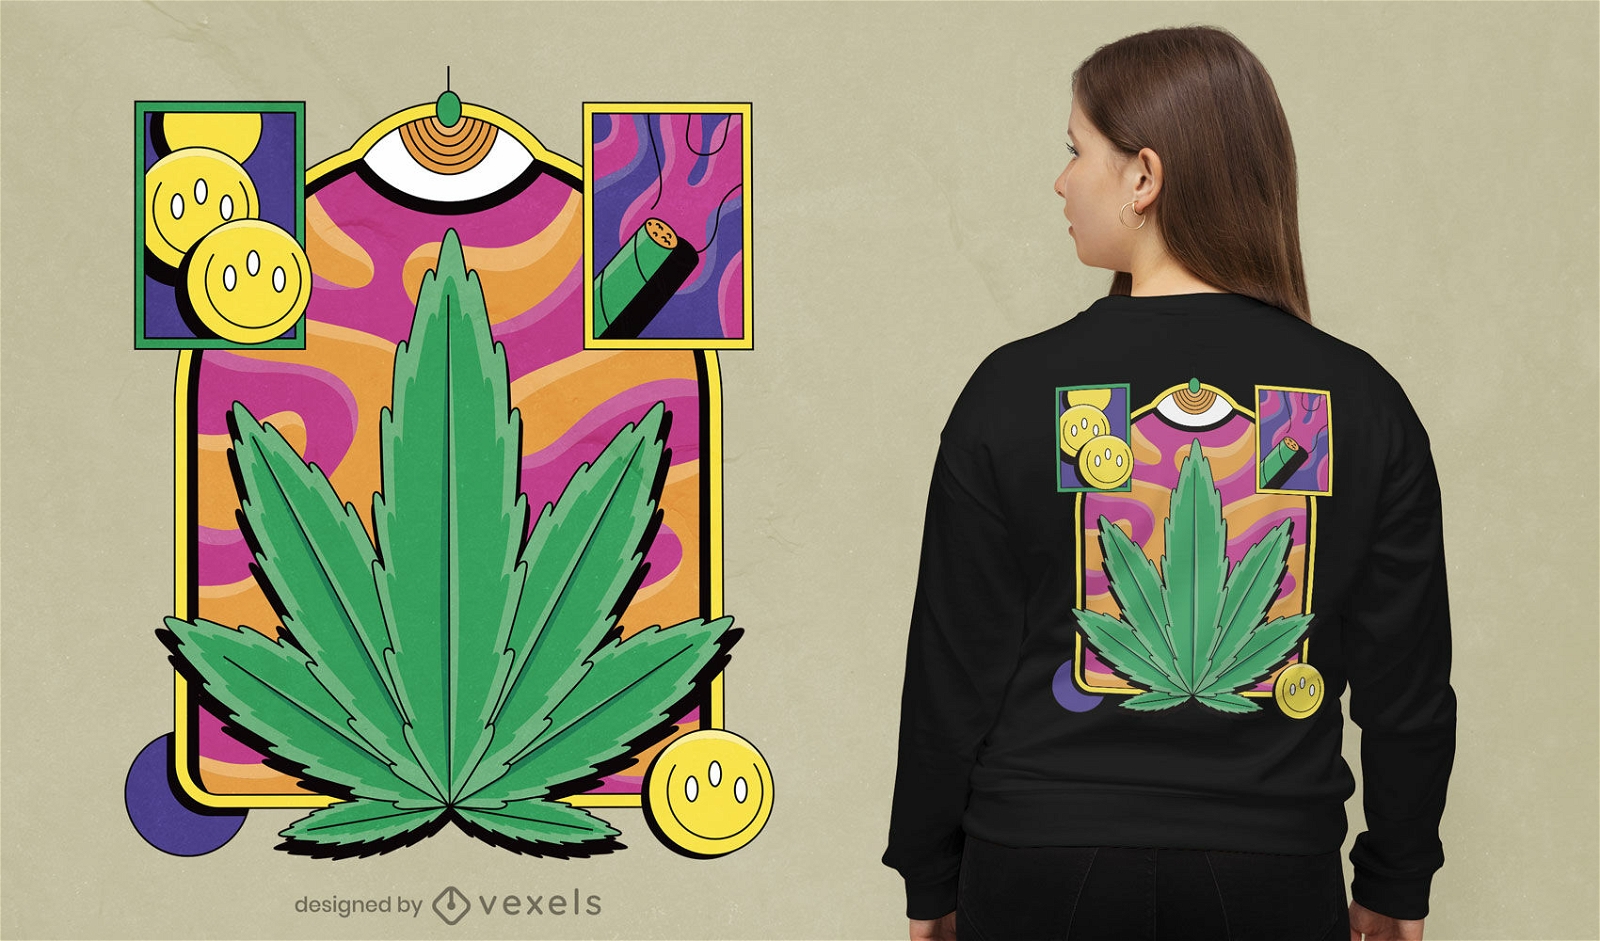 Trippy weed t-shirt design